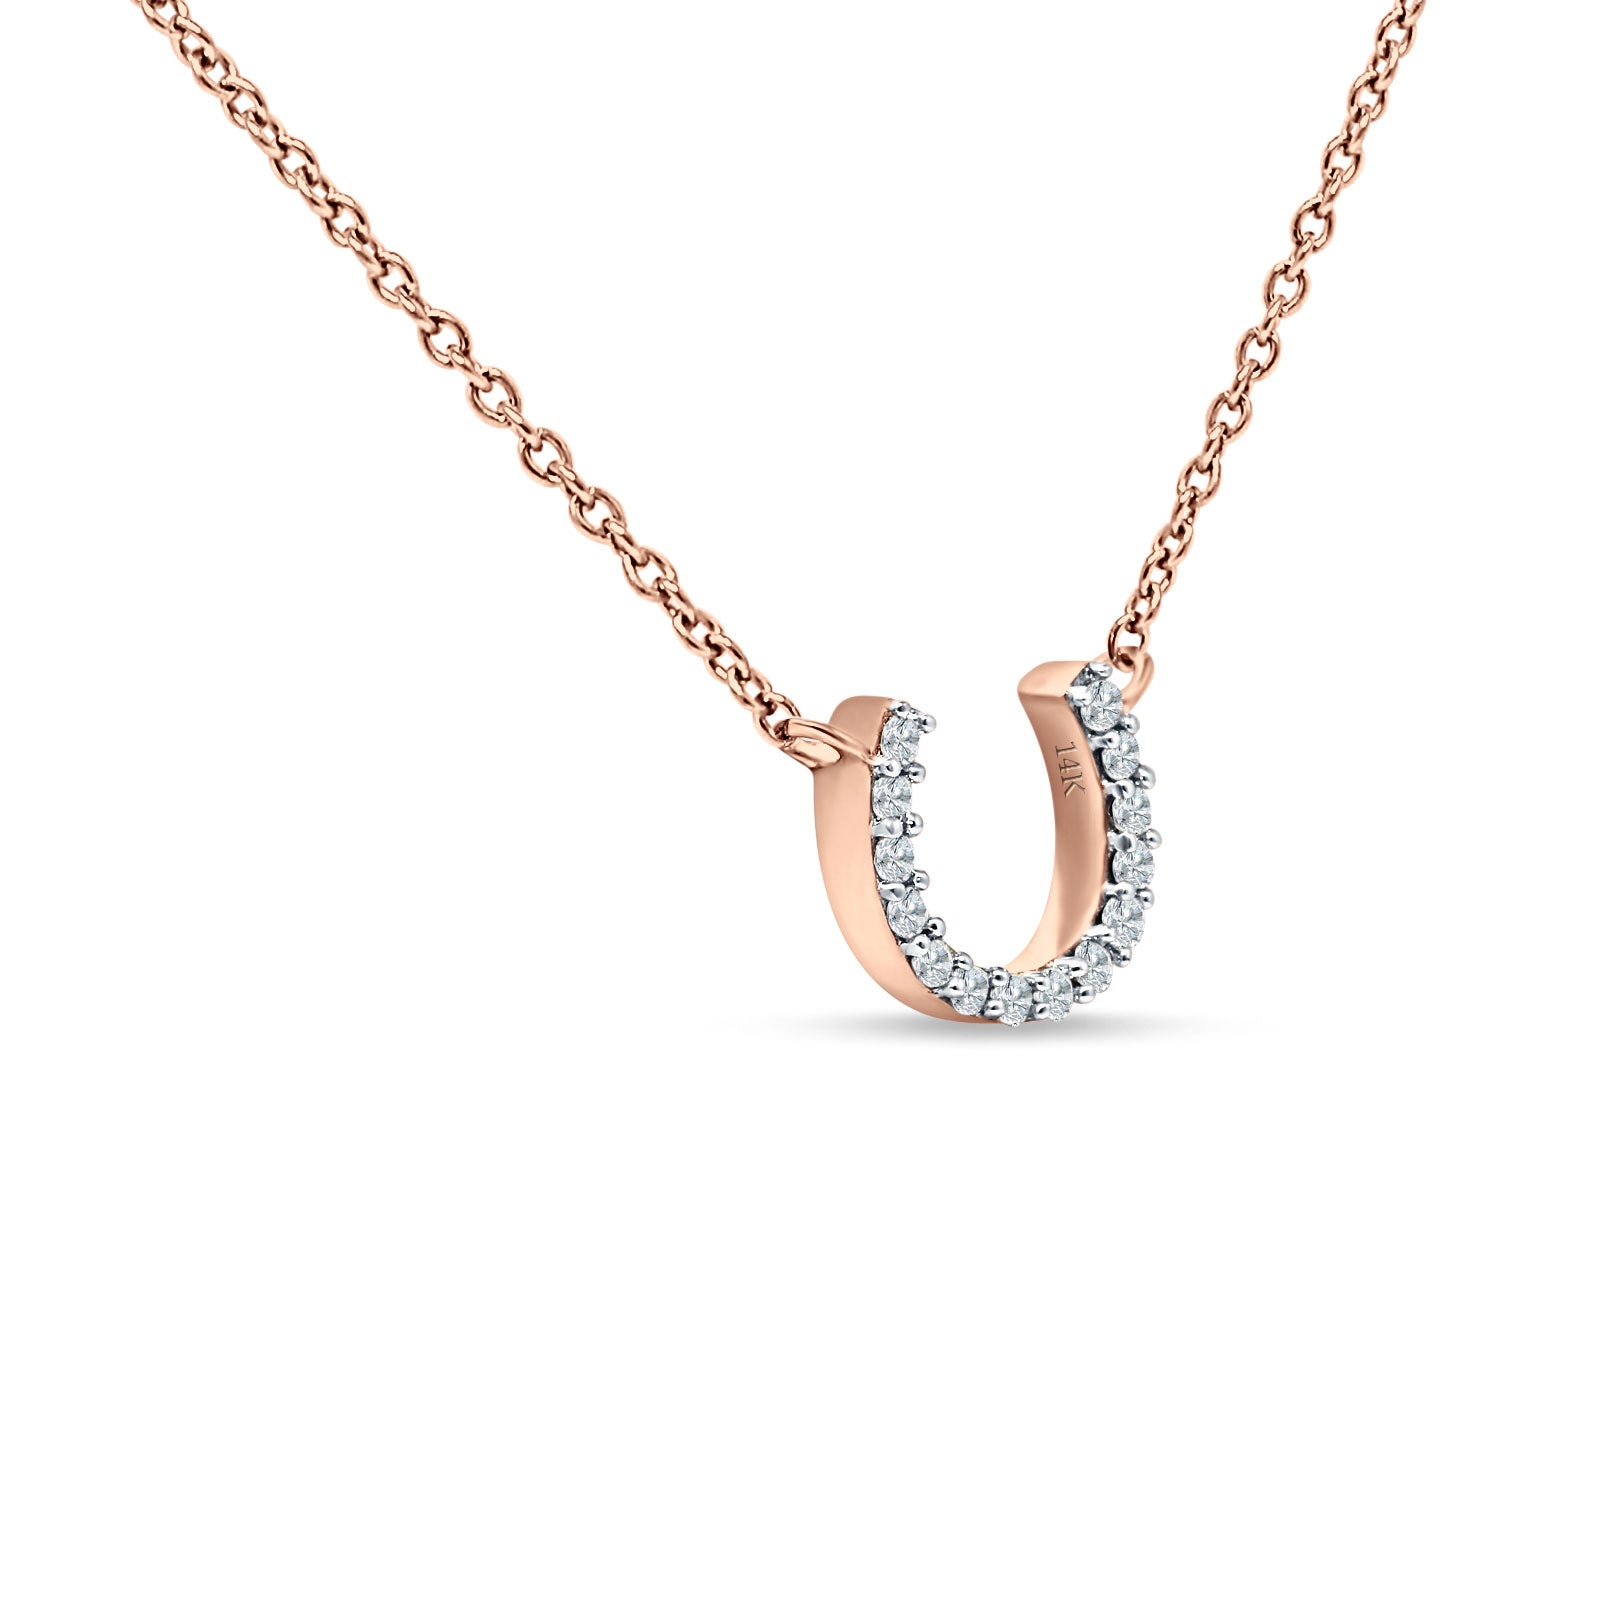 14K Gold 0.06ct Diamond Horseshoe Pendant Chain Necklace 18" Long